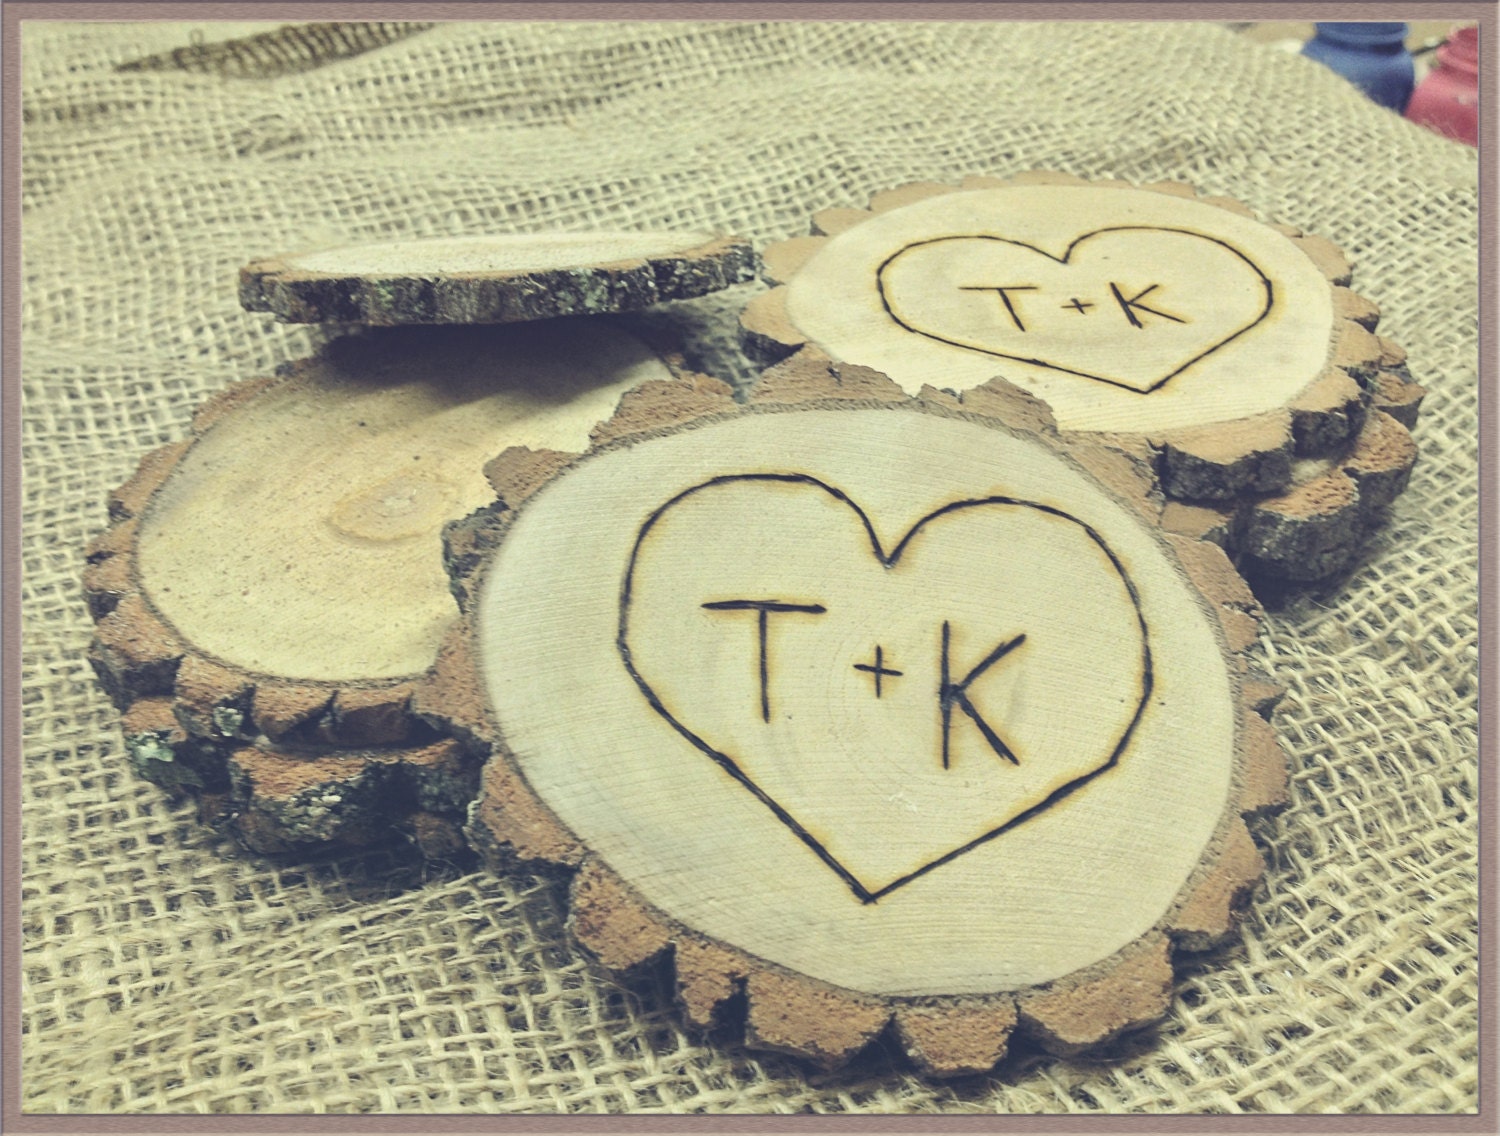 Personalized Wood Burned Tree Slice,wedding favor,table decoration,tree slice coaster,tree slice ornament,wedding centerpiece,rustic wedding